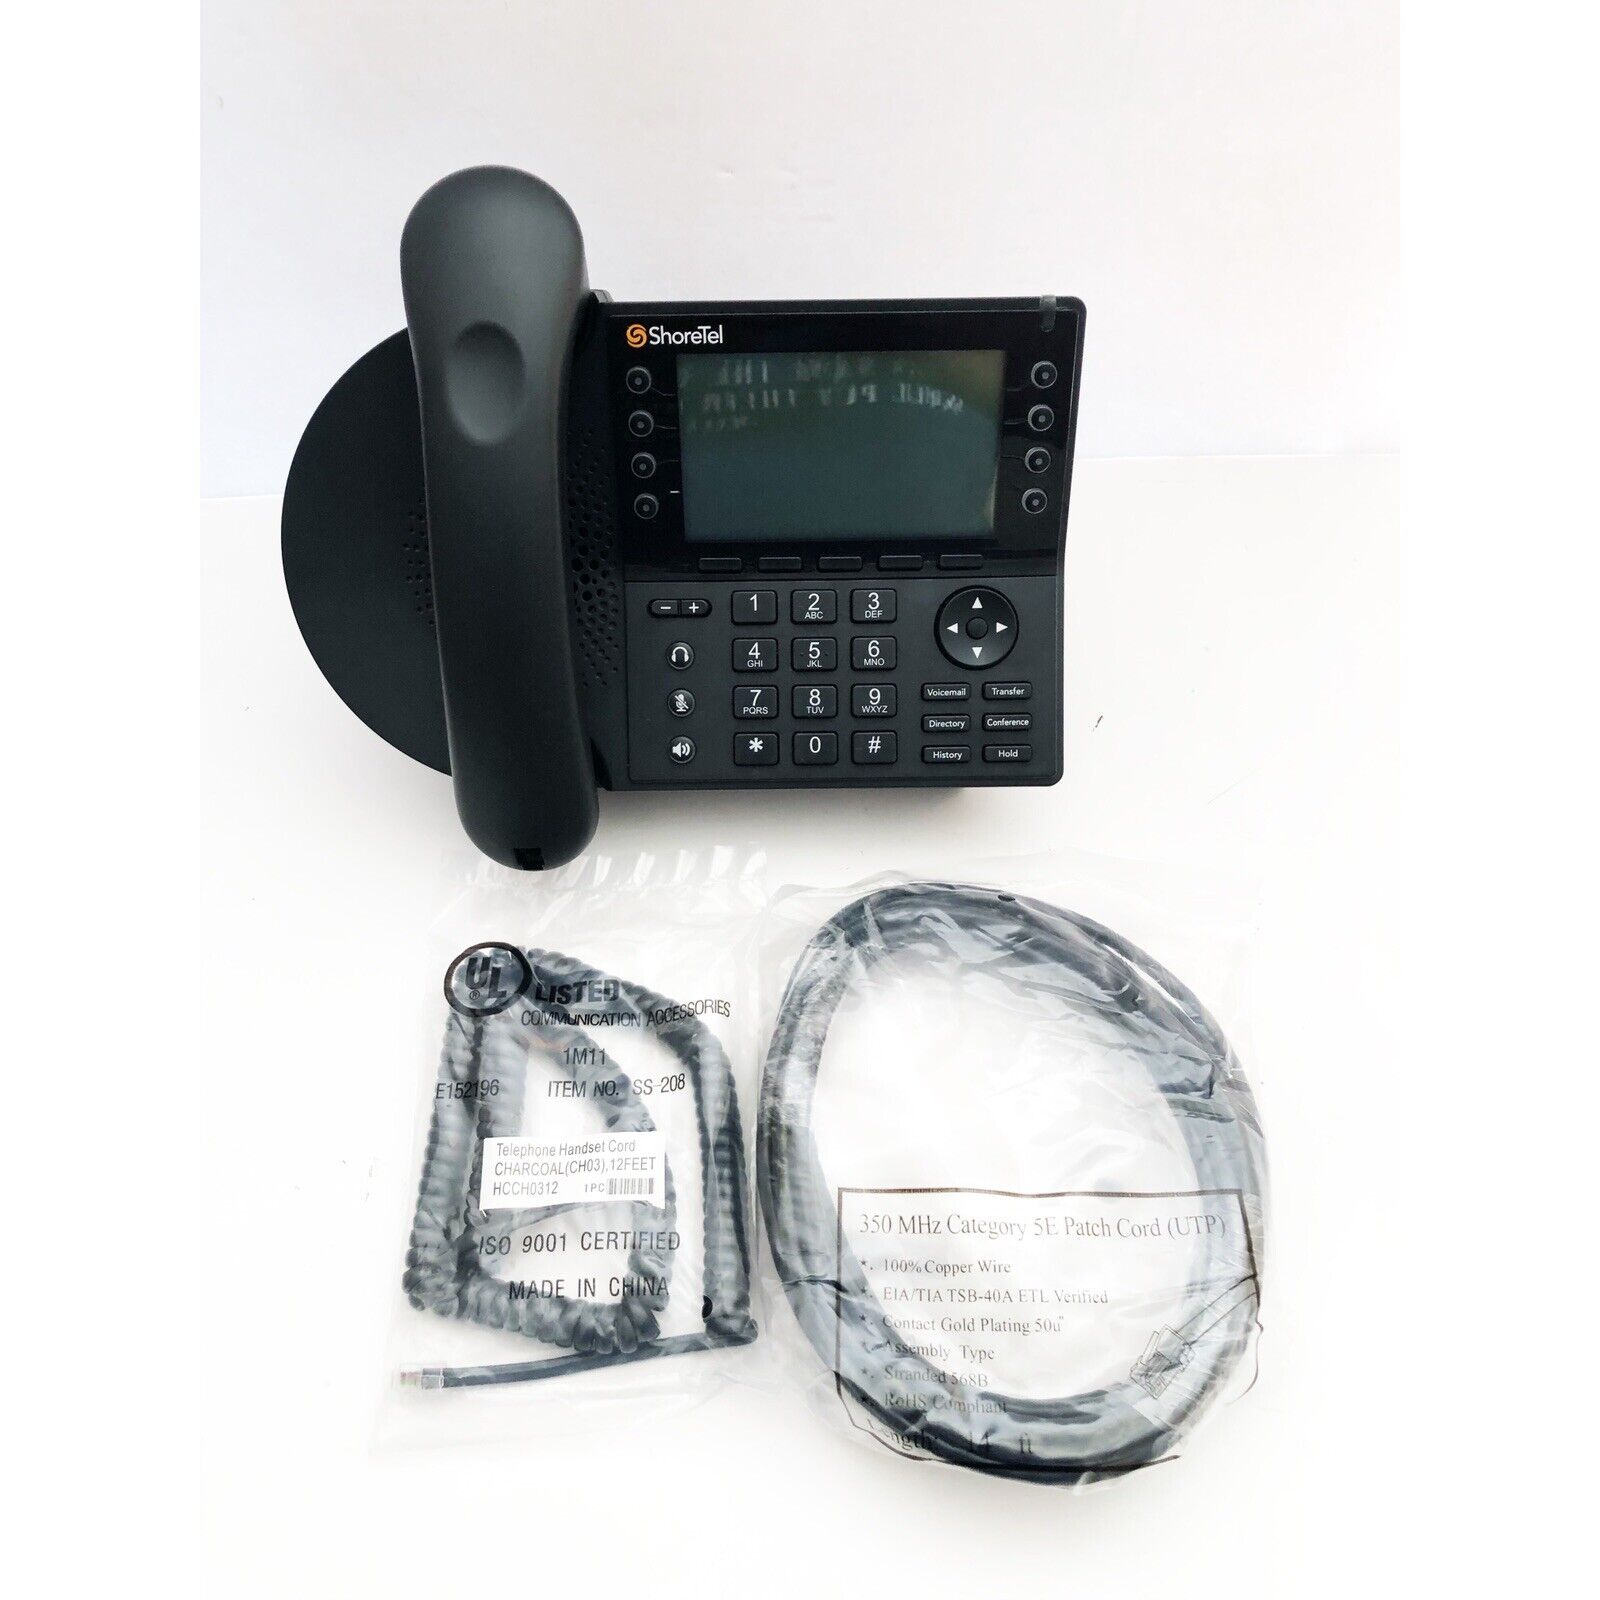 ShoreTel Mitel 480G IP Backlit Color Display Telephone 480 G VOIP Phone 